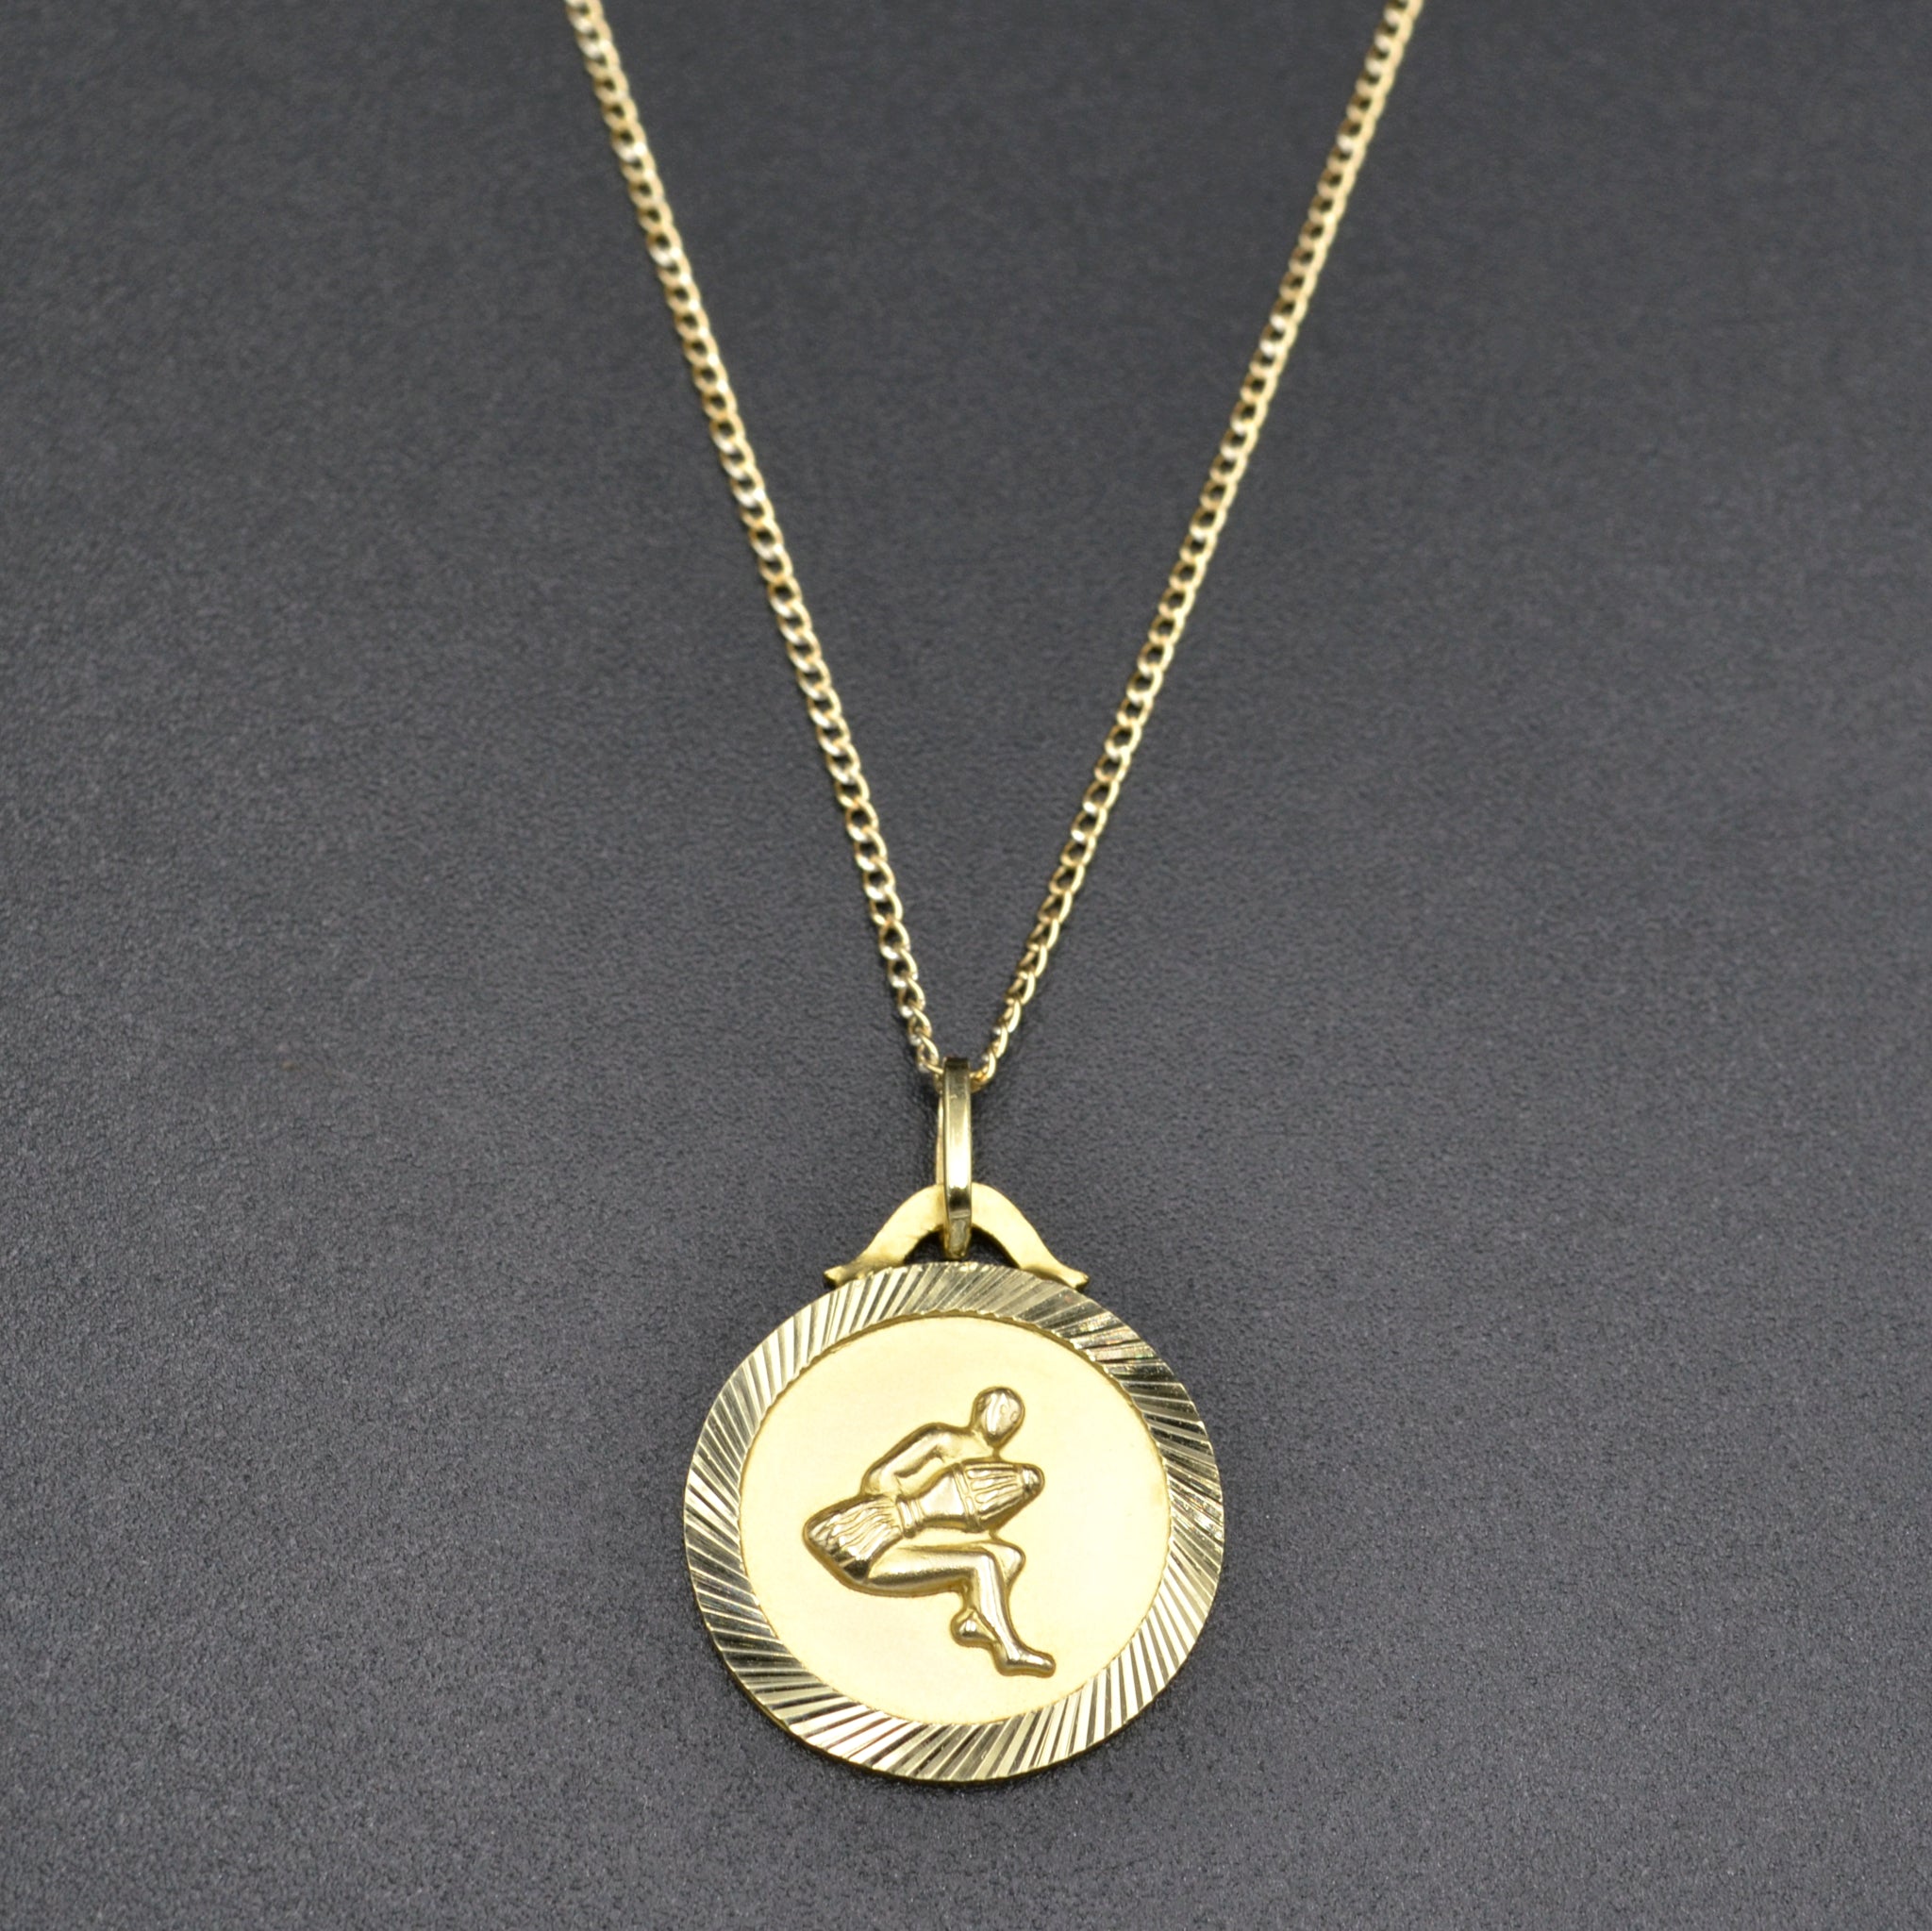 Aquarius Zodiac Diamond Pendant Necklace 14k Yellow Gold (0.15ct) - AZ2498